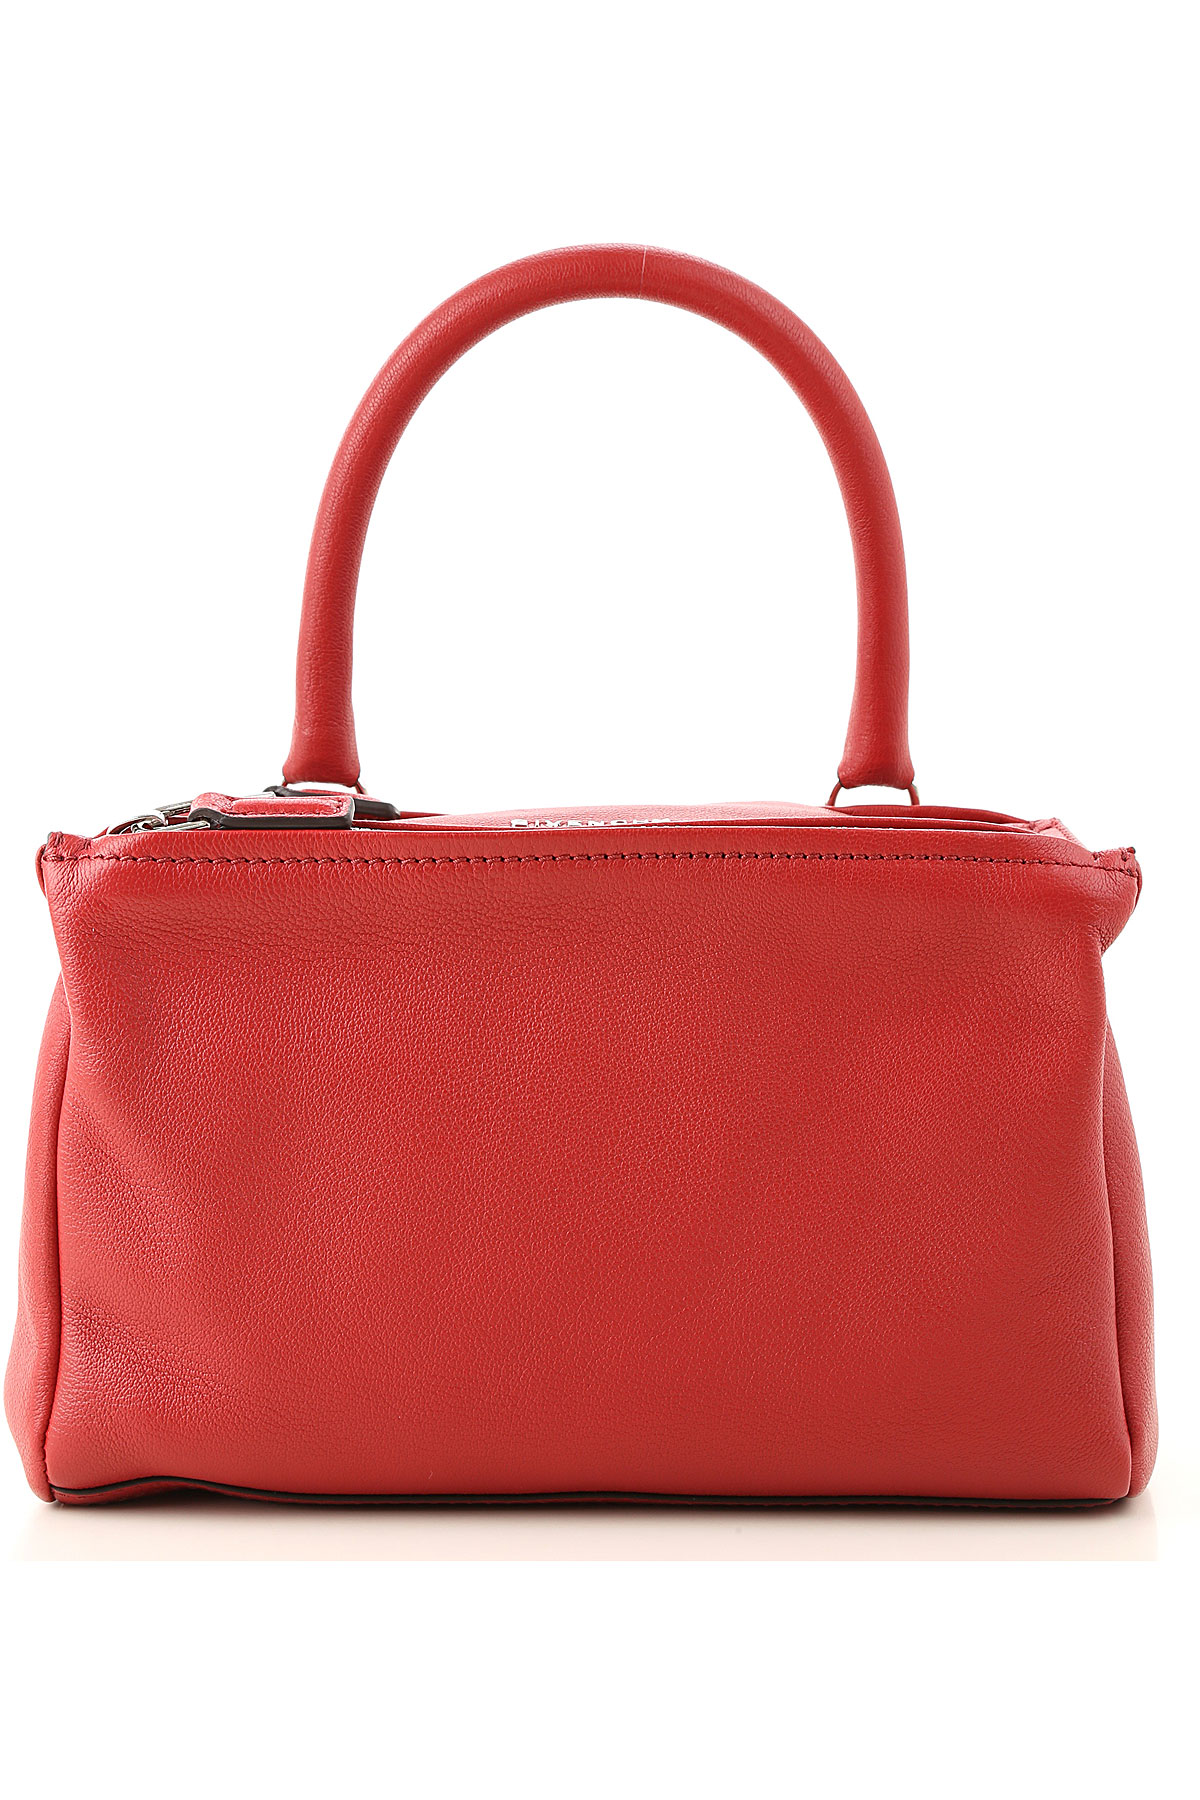 Handbags Givenchy, Style code: bb05251013-640-